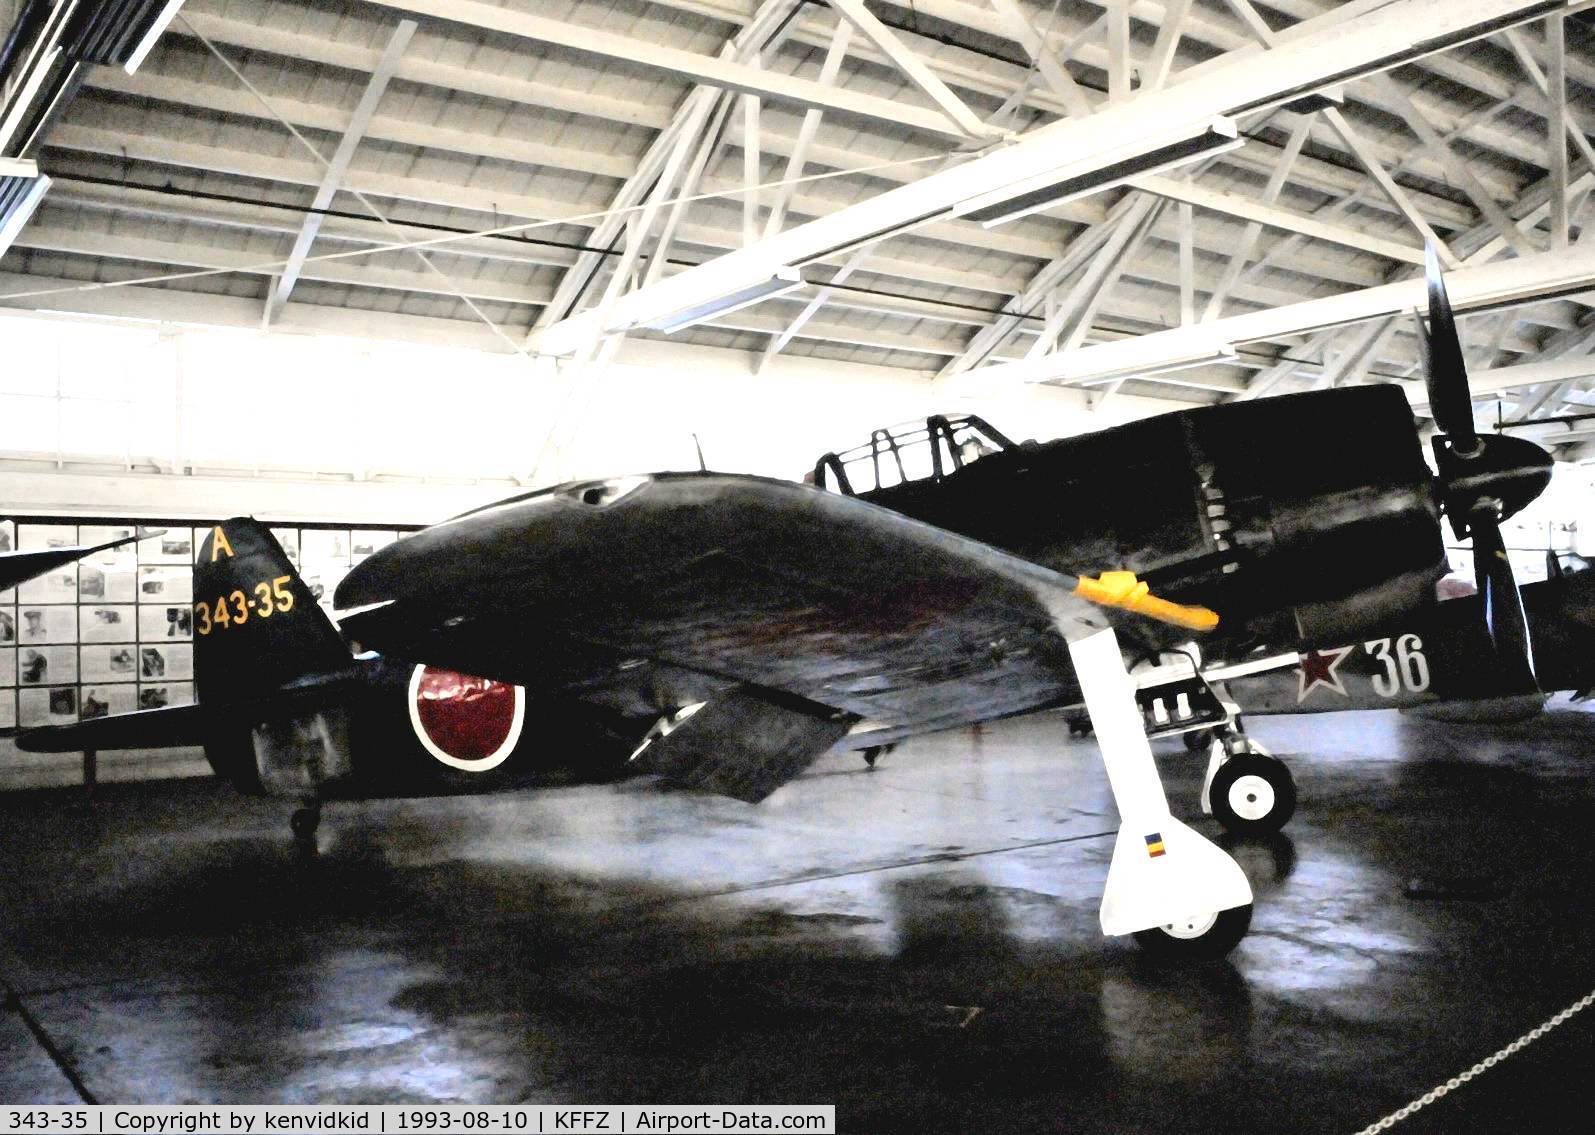 343-35, Kawanishi N1K2-JA Shiden Kai C/N 5341, At the Champlin Fighter Museum.